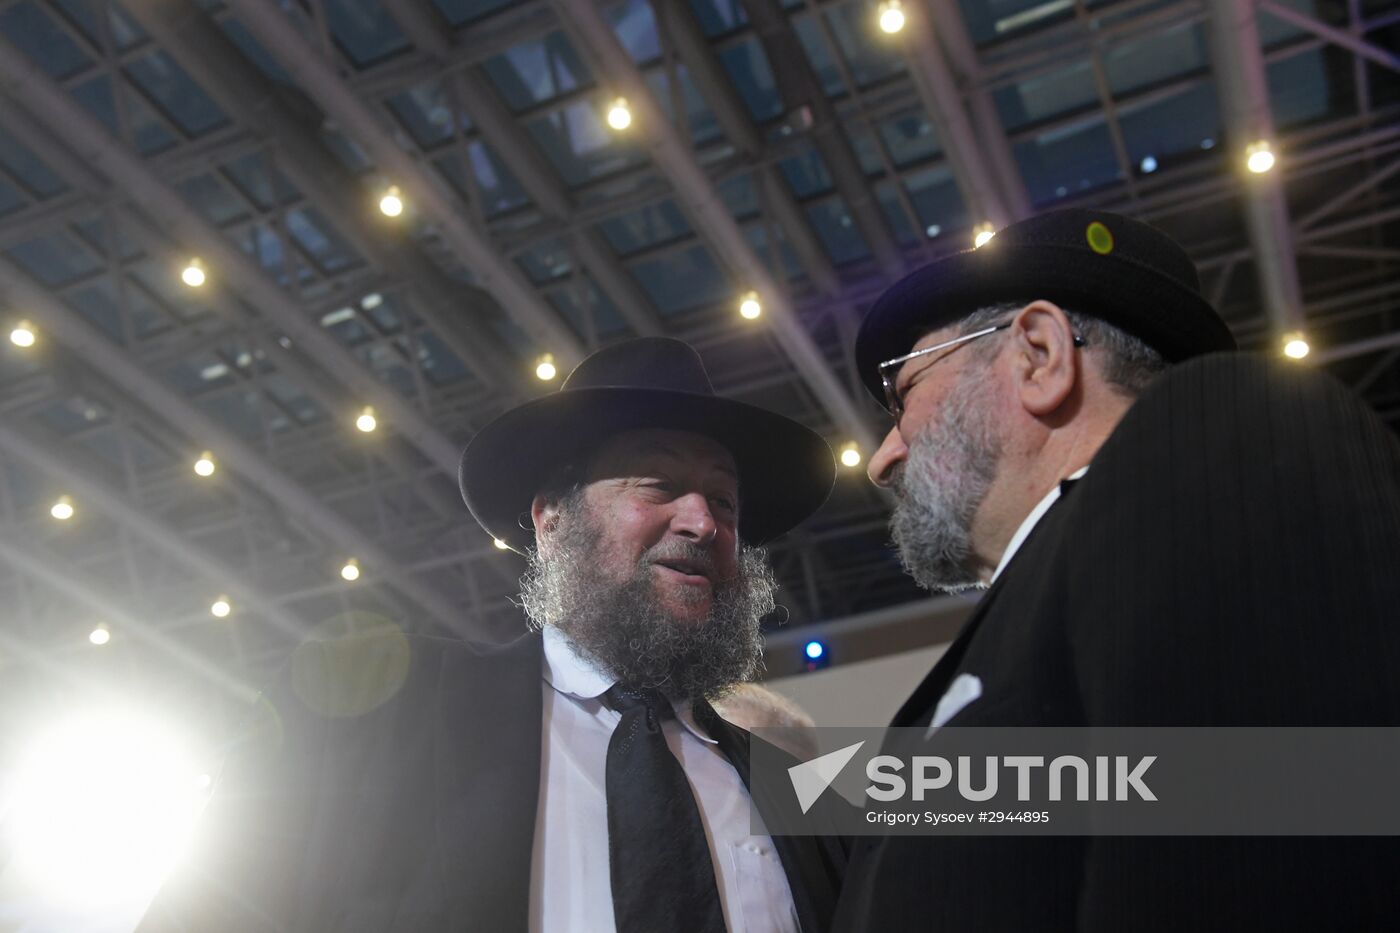 Gala evening to mark Russian Jewish Congress 20th anniversary